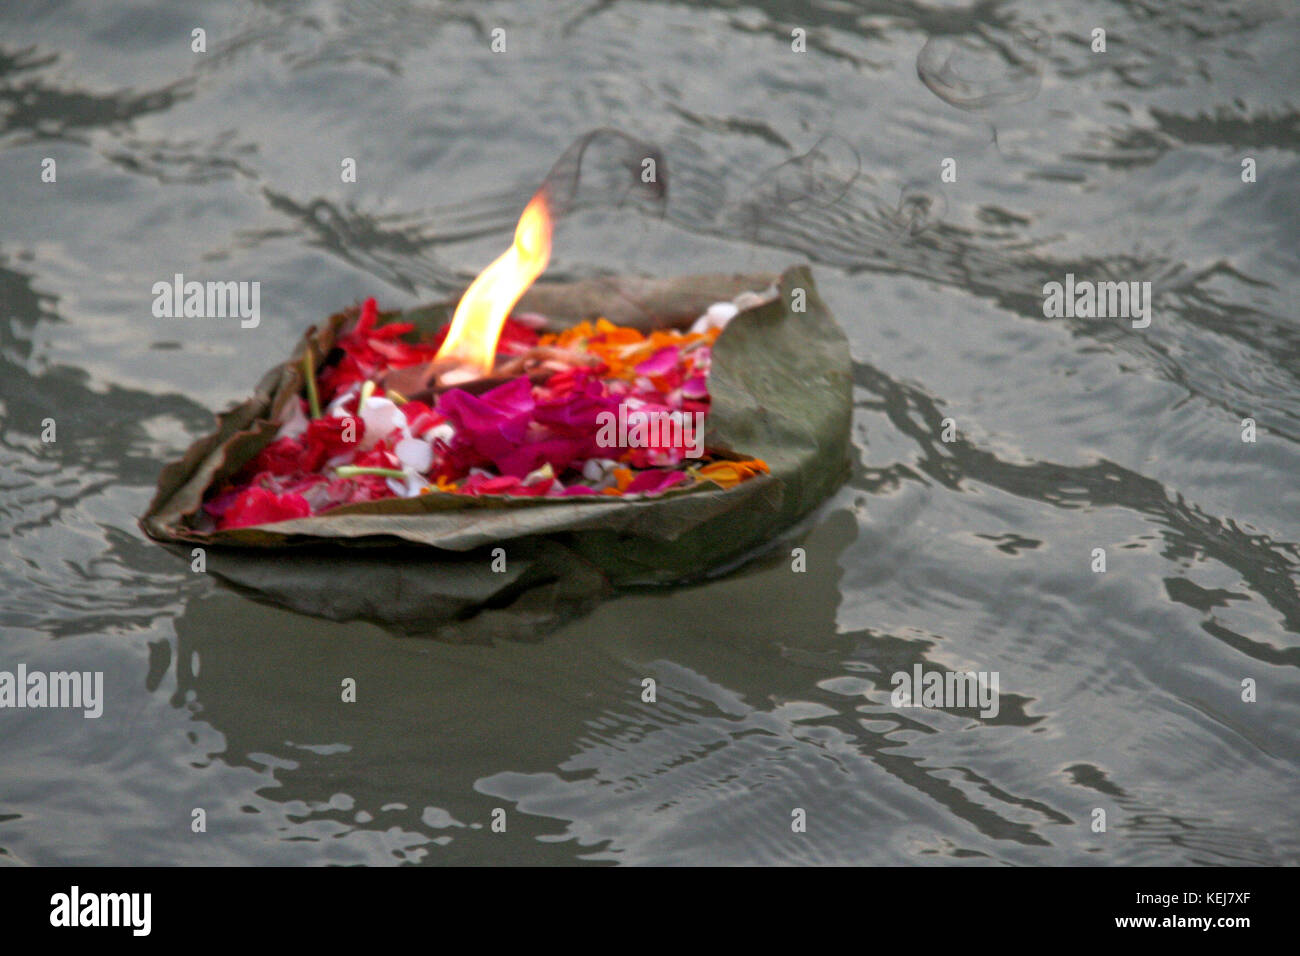 Abend aarthi Programm, Har-ki-Pauri am Ufer des Flusses Ganga, Haridwar, uttarakhand, Indien, Asien Stockfoto